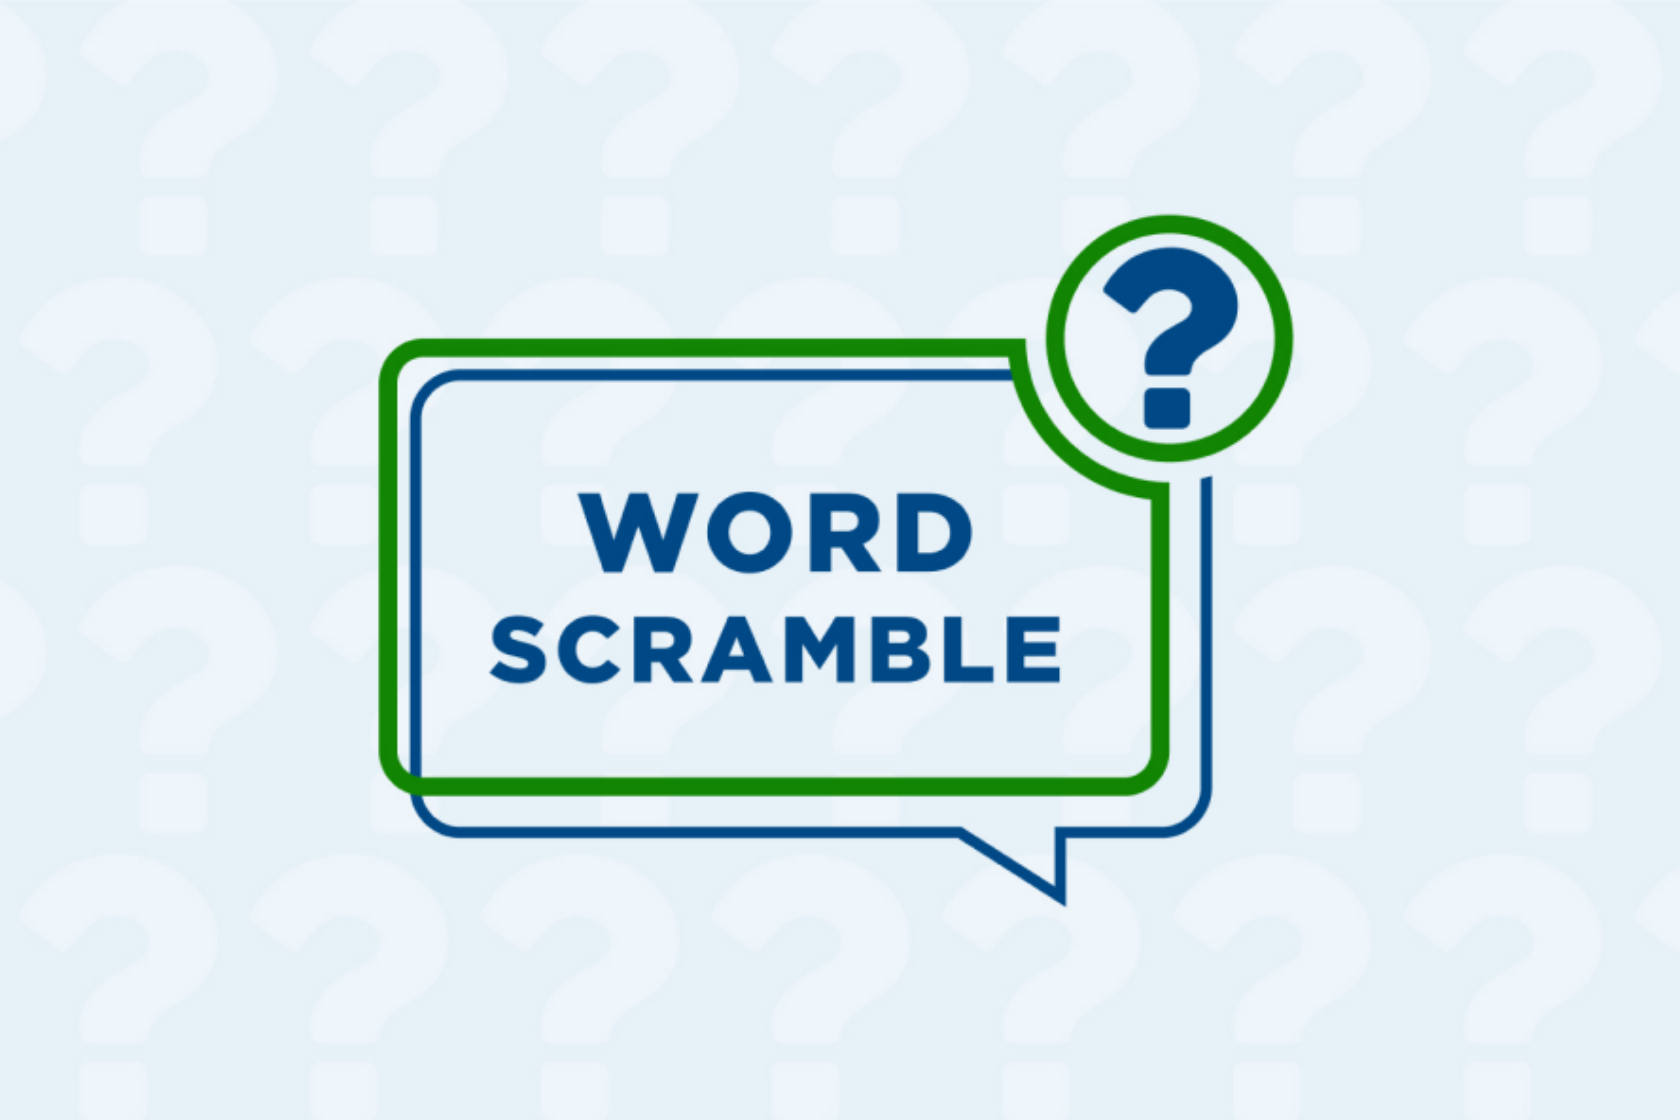 Word scramble